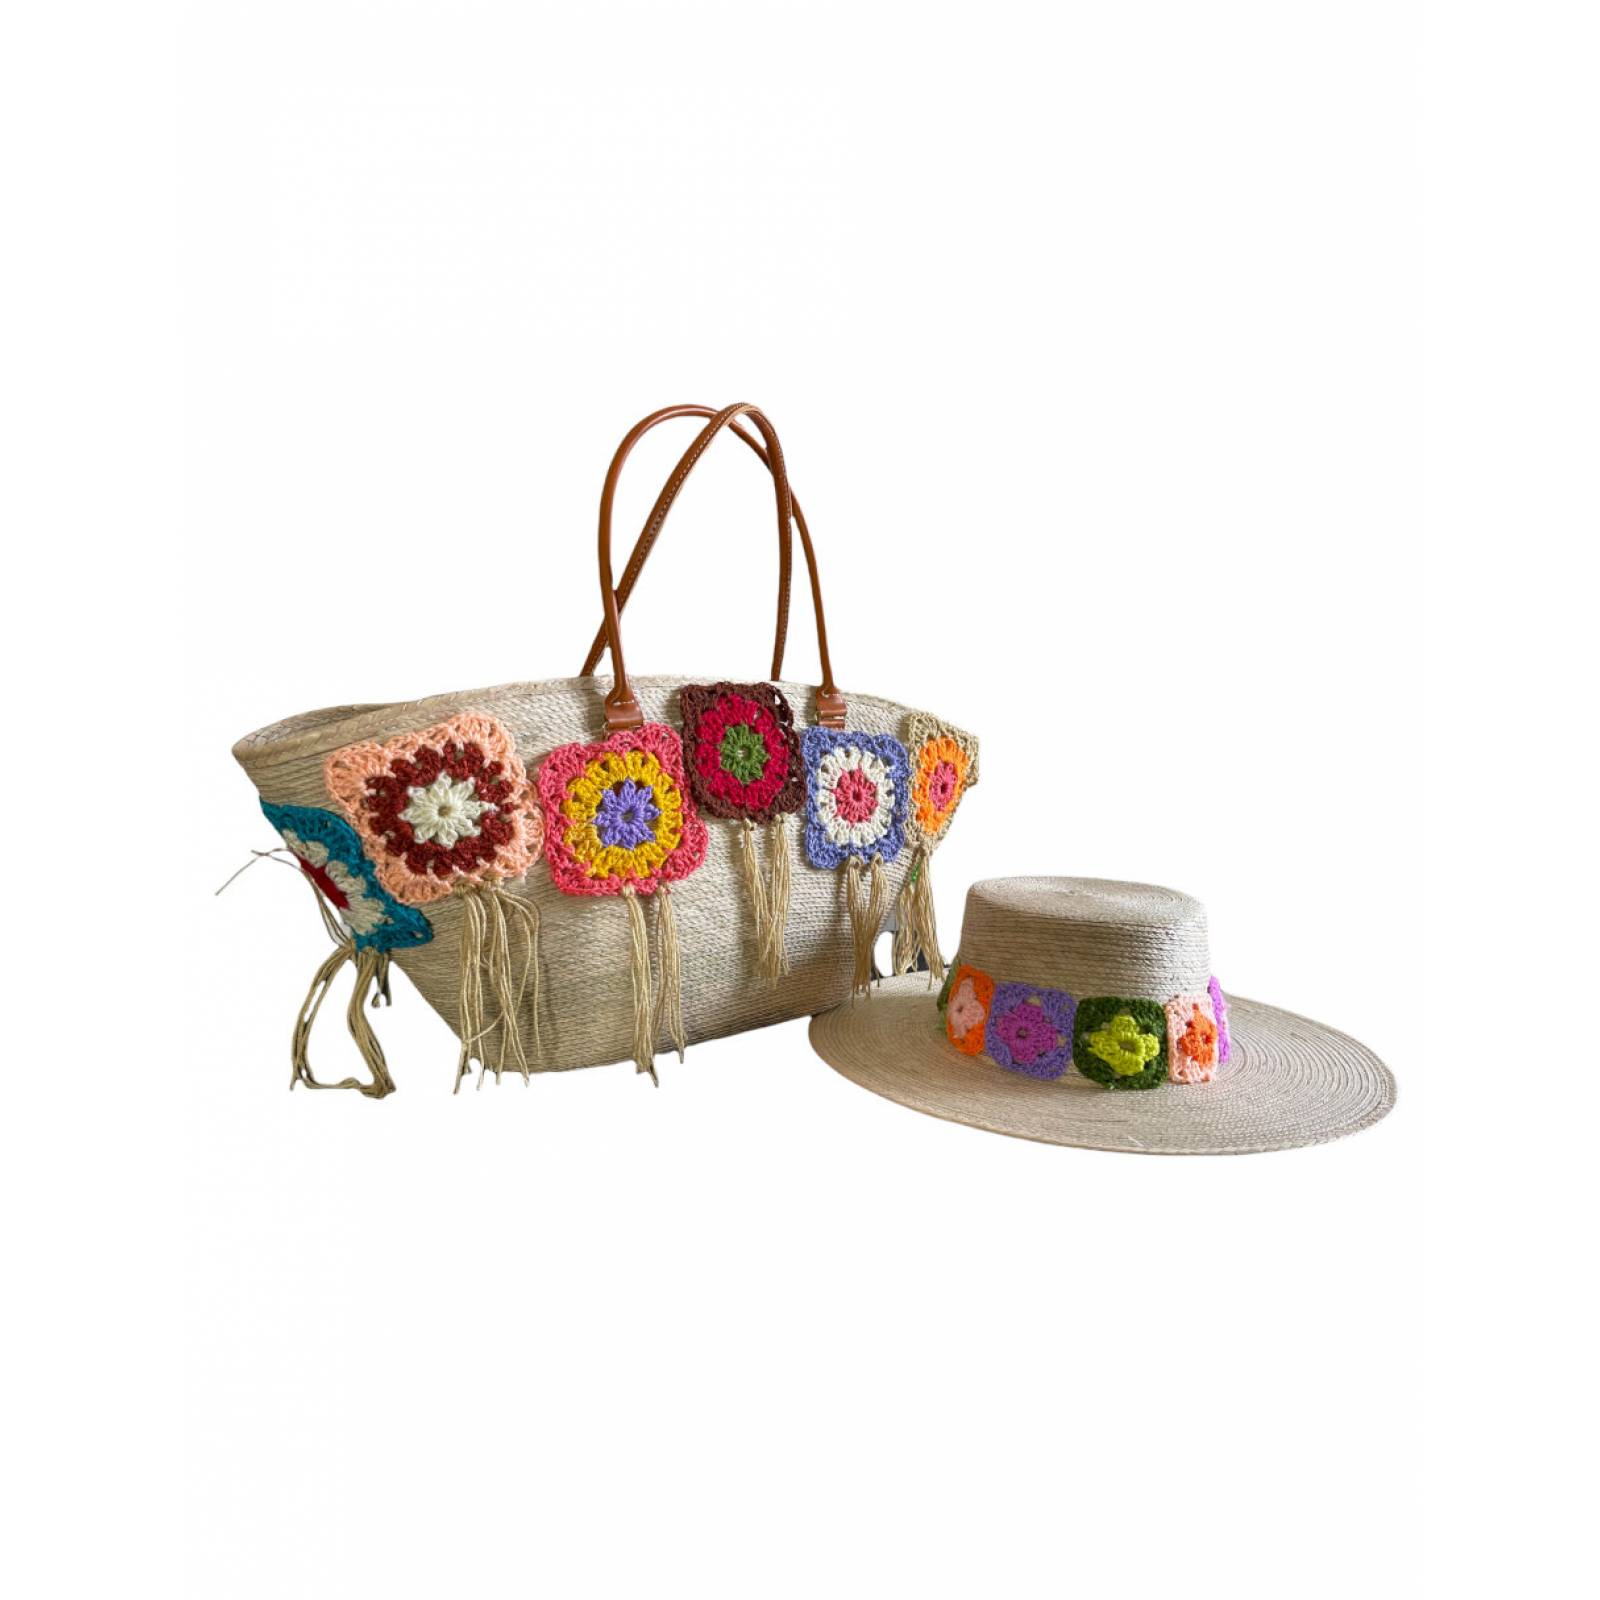 Kit  de bolsa y sombrero artesanal de palma estambre tejido